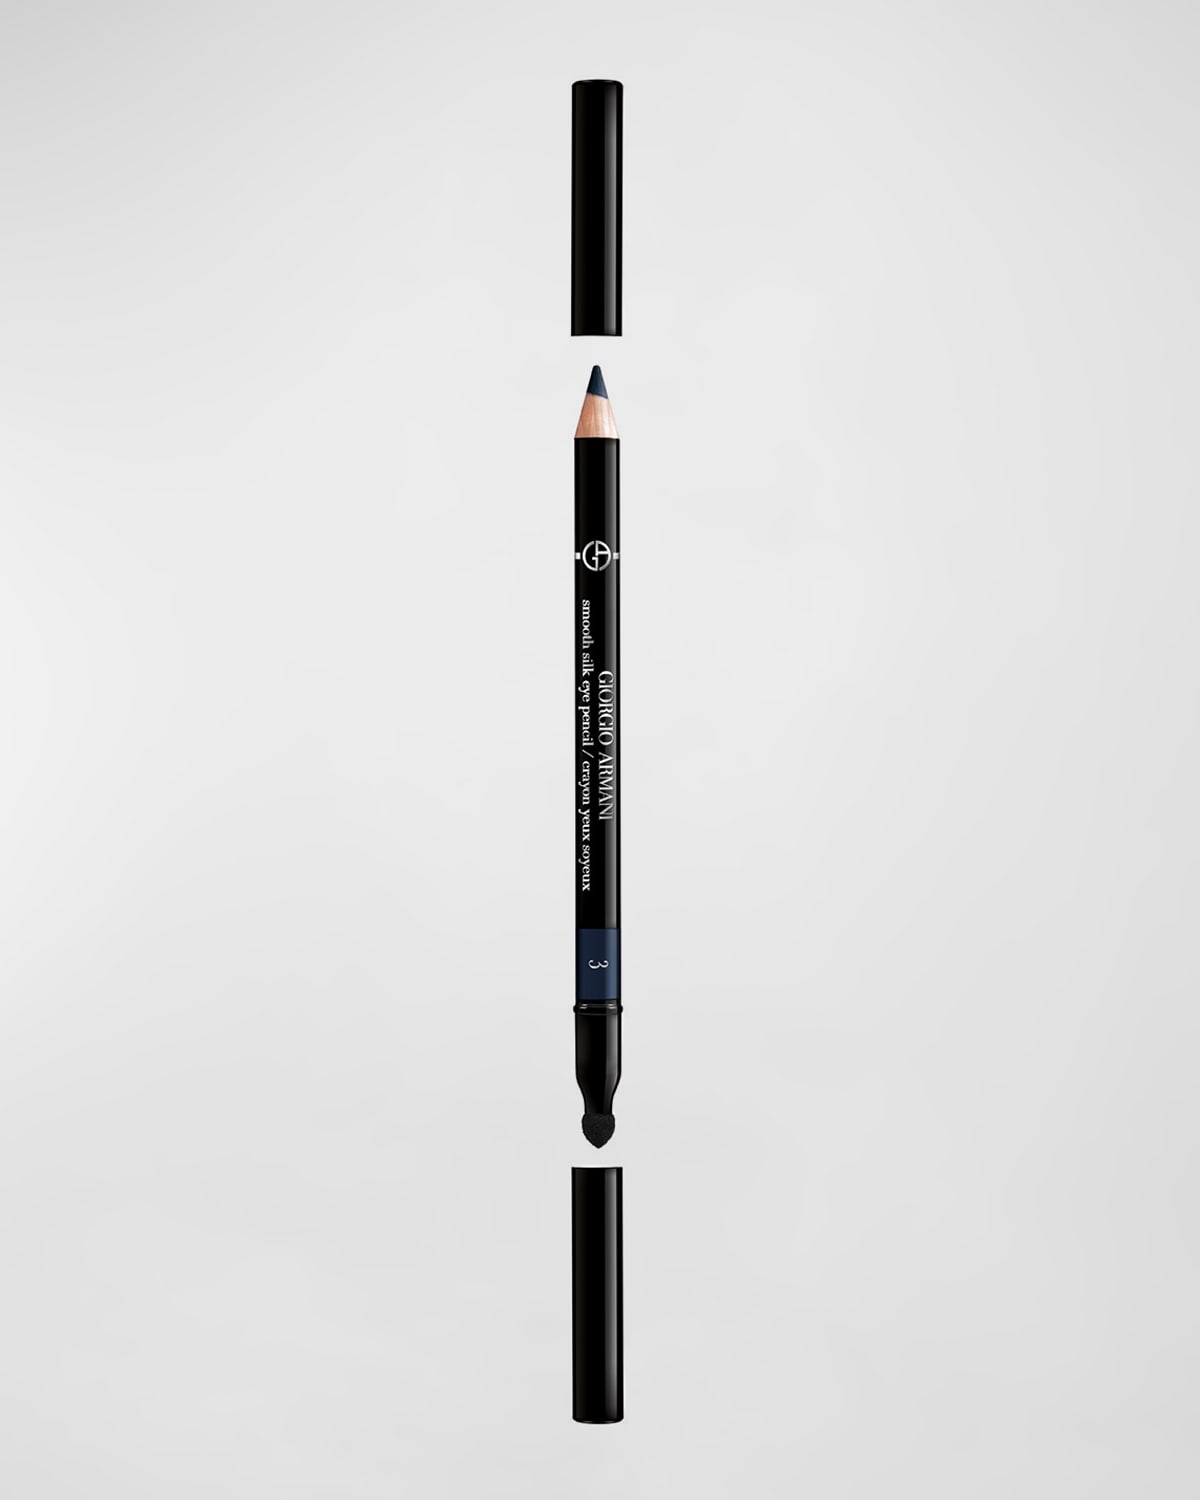 Armani Beauty Smooth Silk Eye Pencil In 3